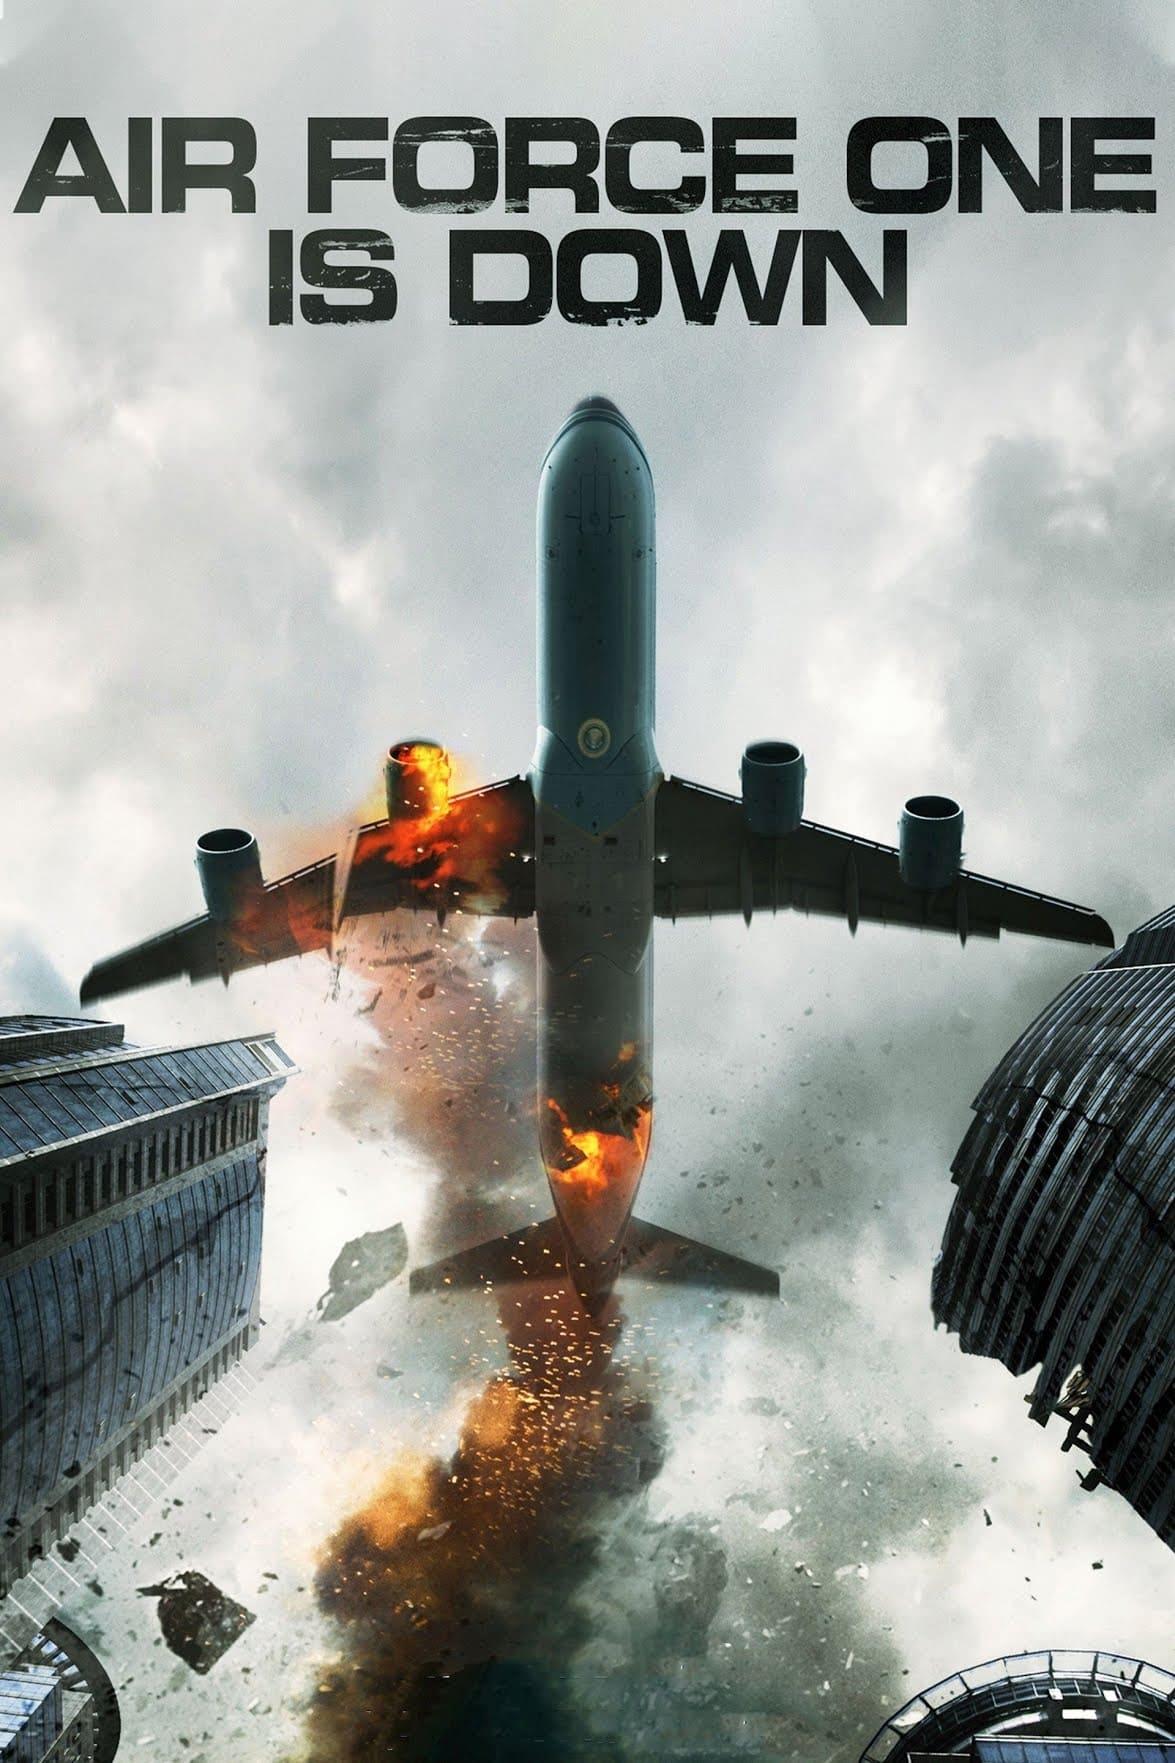 Alistair MacLean's Air Force One Is Down poster